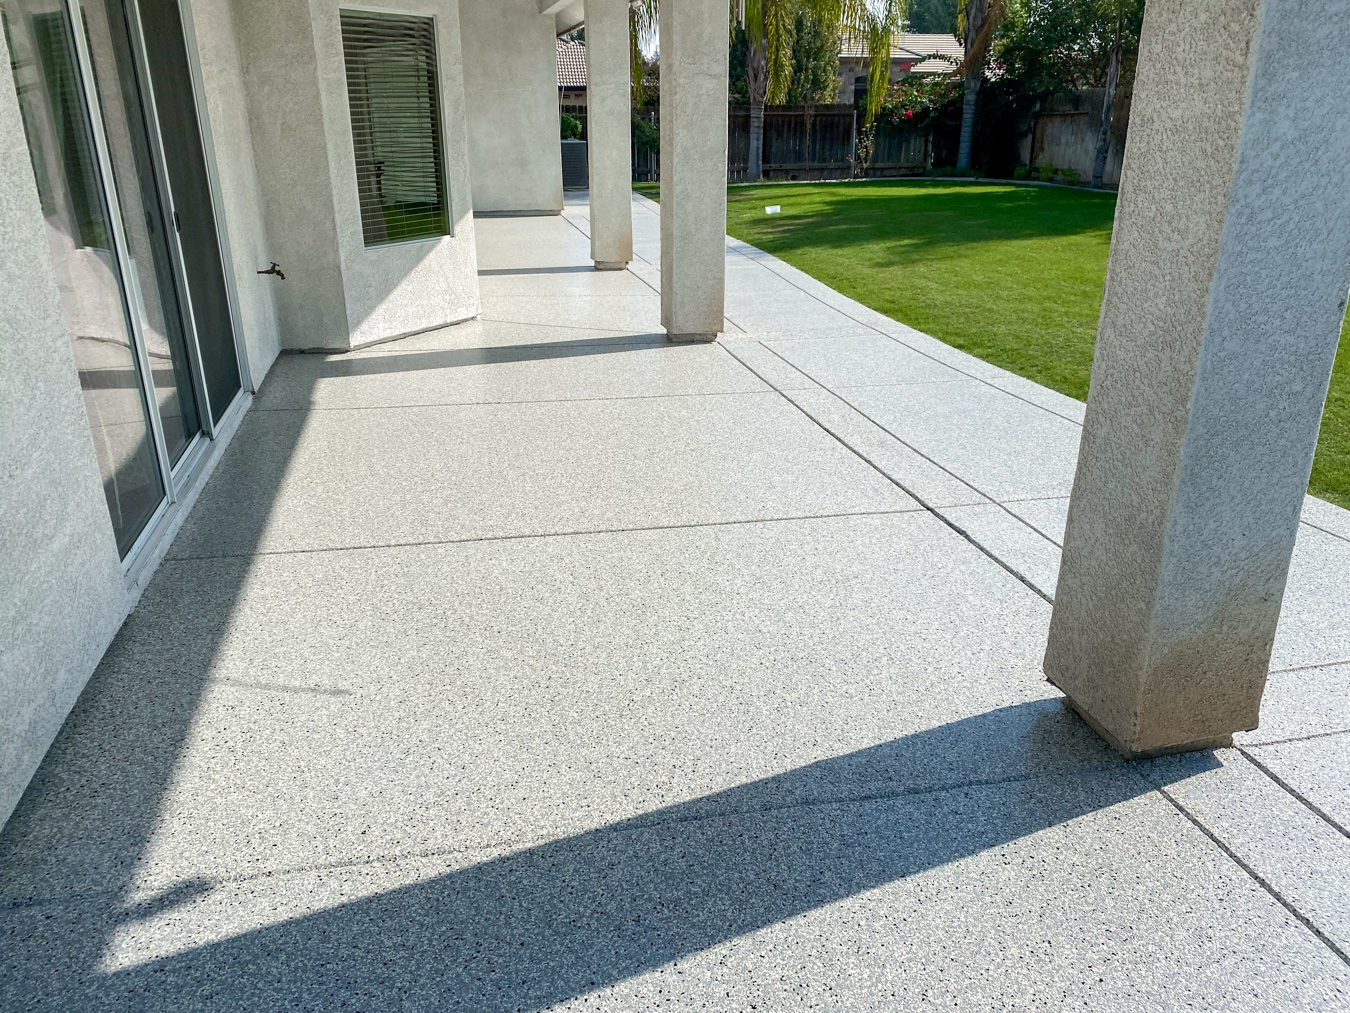 Patio with gray concrete coating